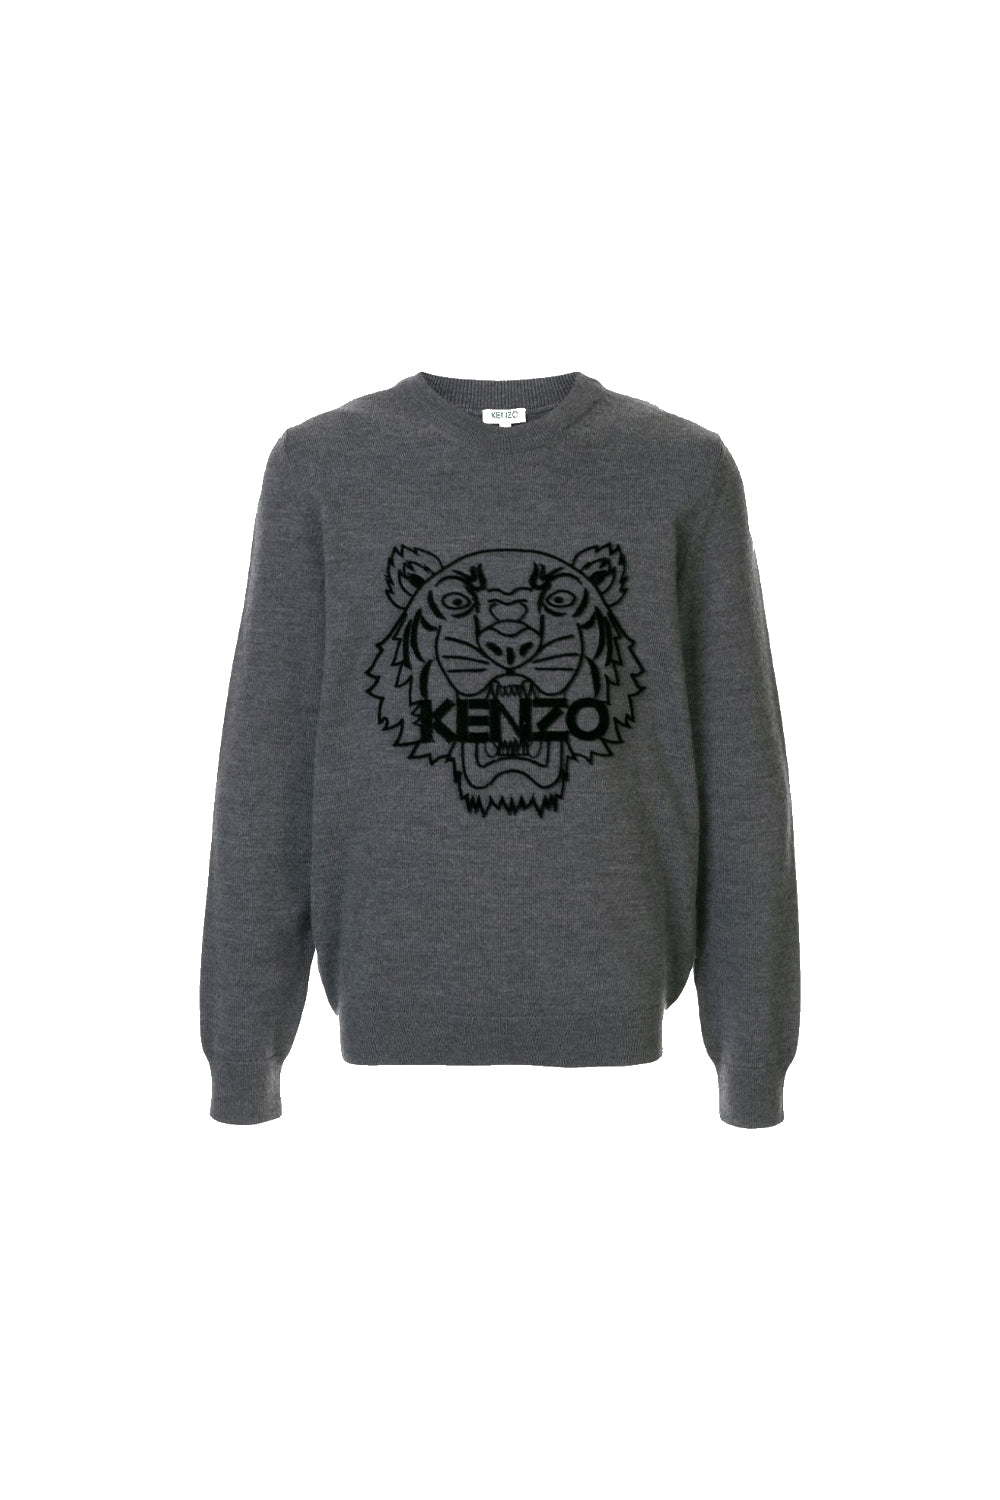 Kenzo Wool tiger sweatshirt Grey